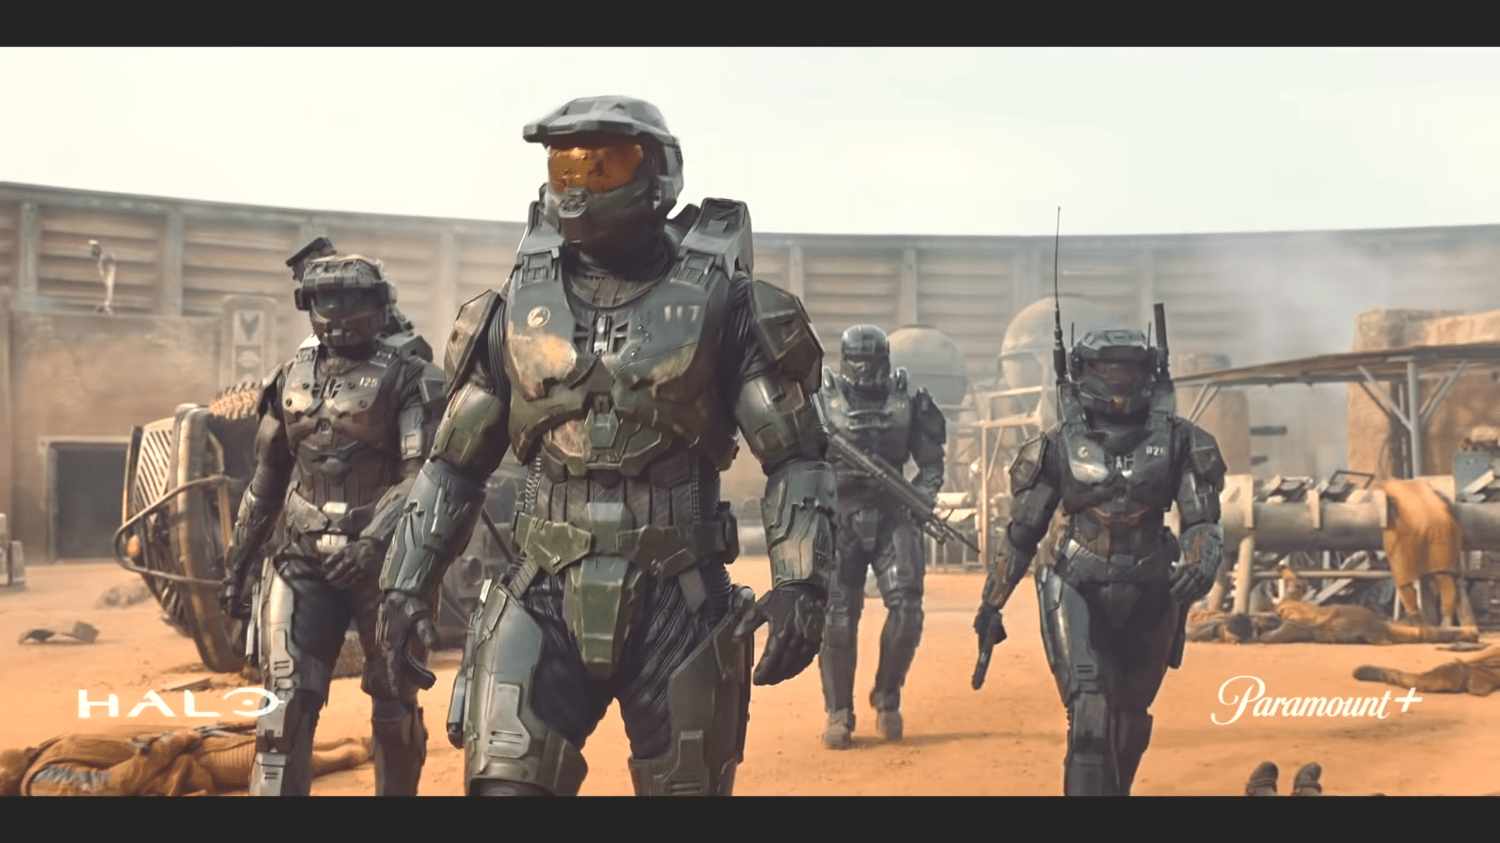 Halo TV show season 2 ordered as part of Paramount+ content blitz |  TweakTown